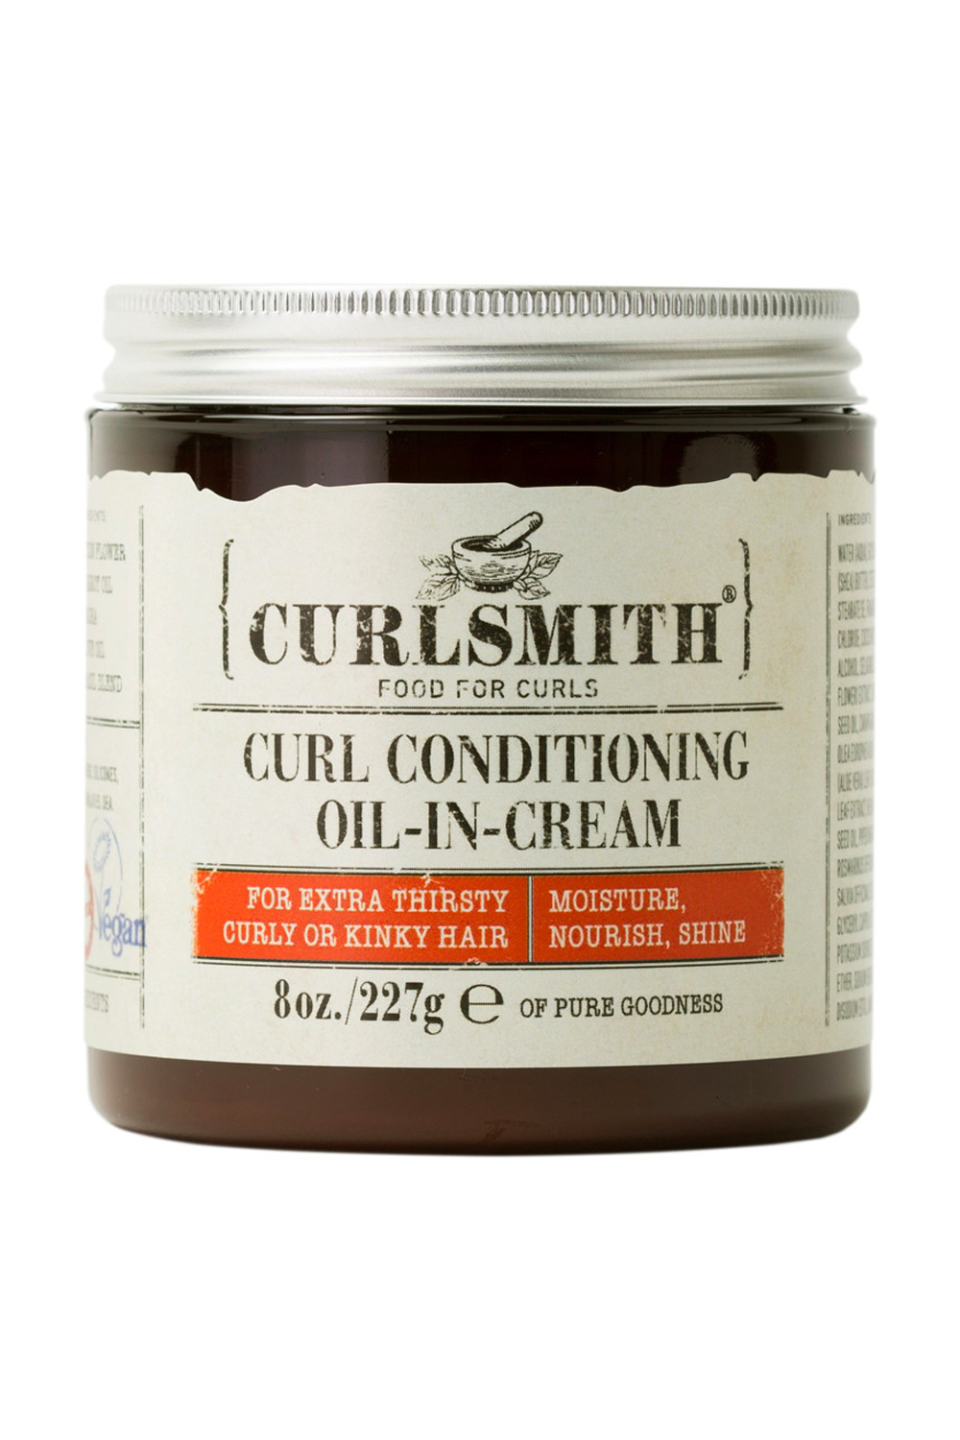 2) Curlsmith Curl Conditioning Oil-In-Cream